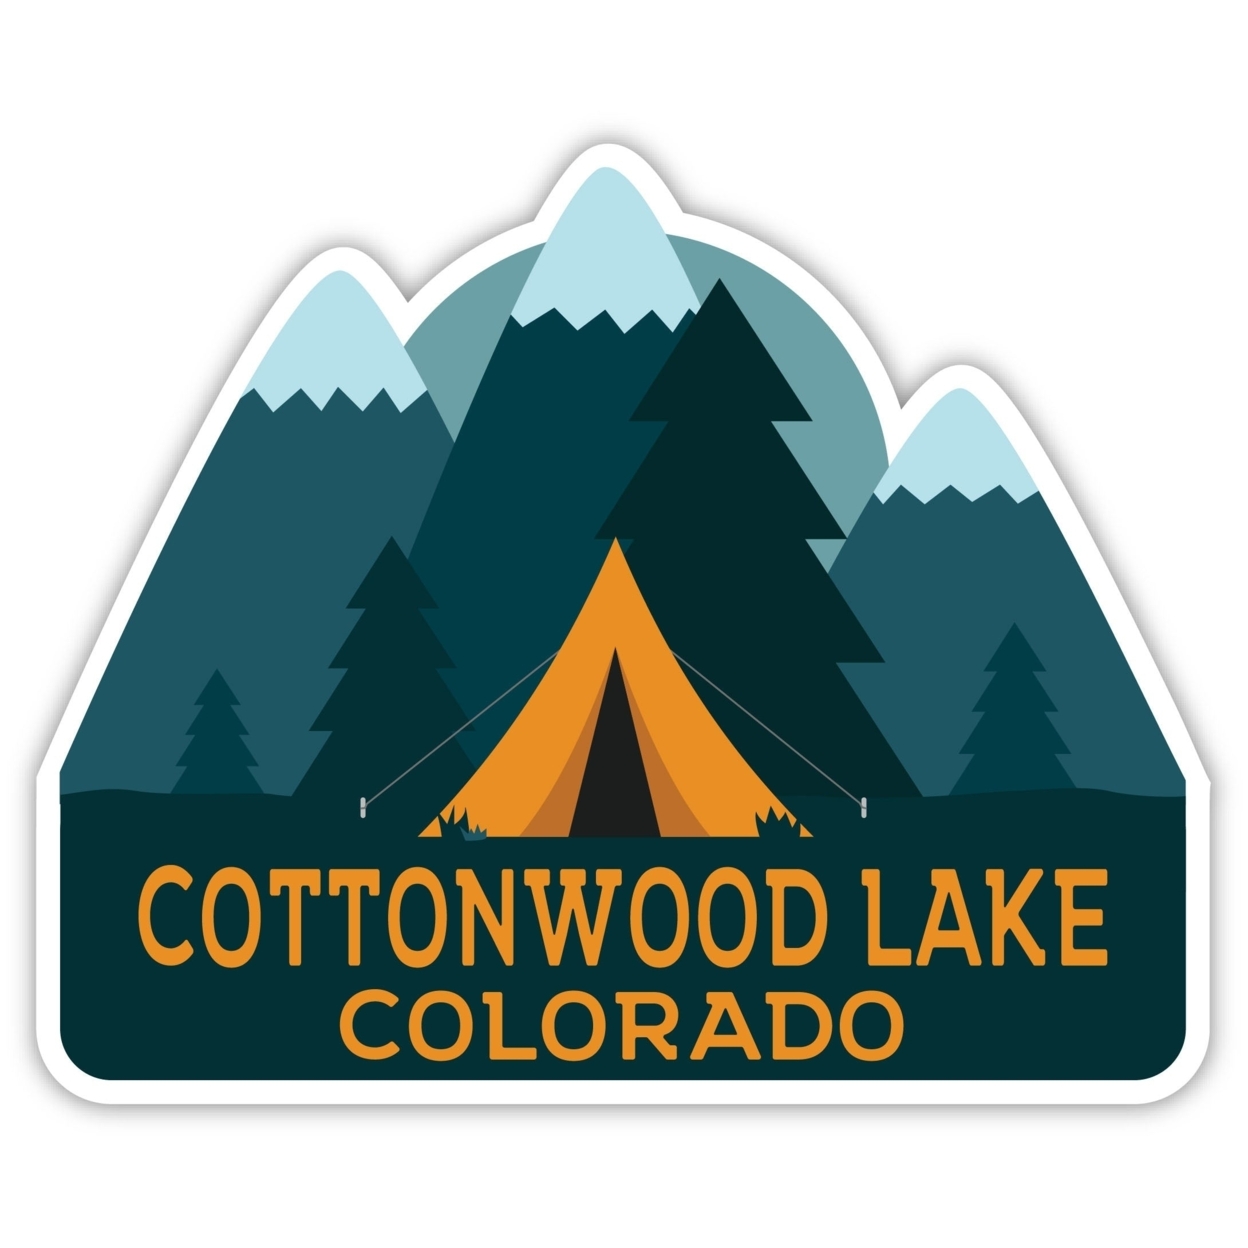 Cottonwood Lake Colorado Souvenir Decorative Stickers (Choose Theme And Size) - 4-Pack, 12-Inch, Bear